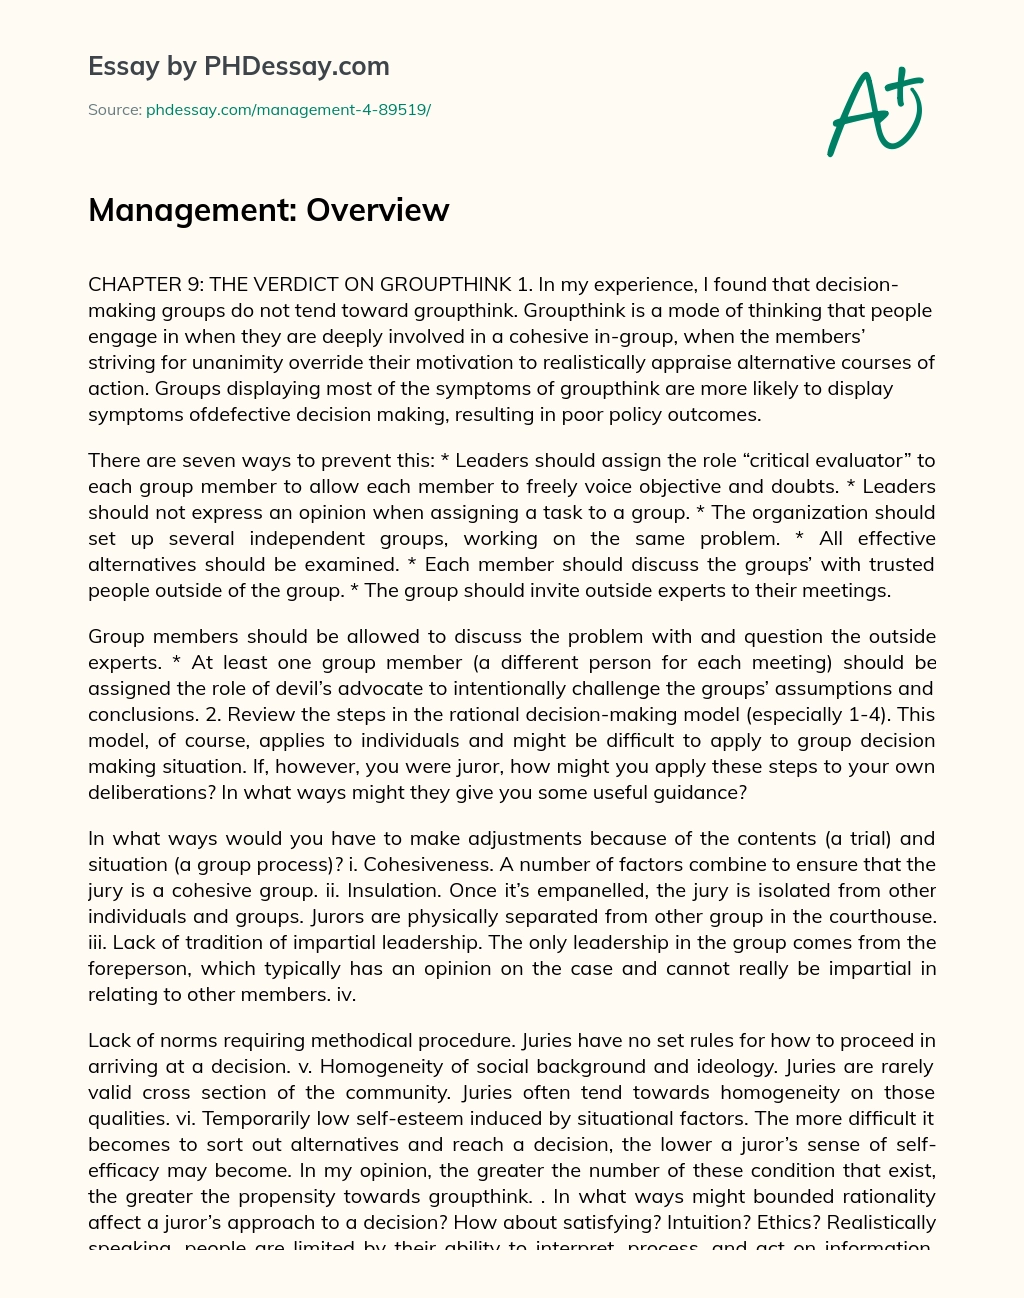 Management: Overview essay